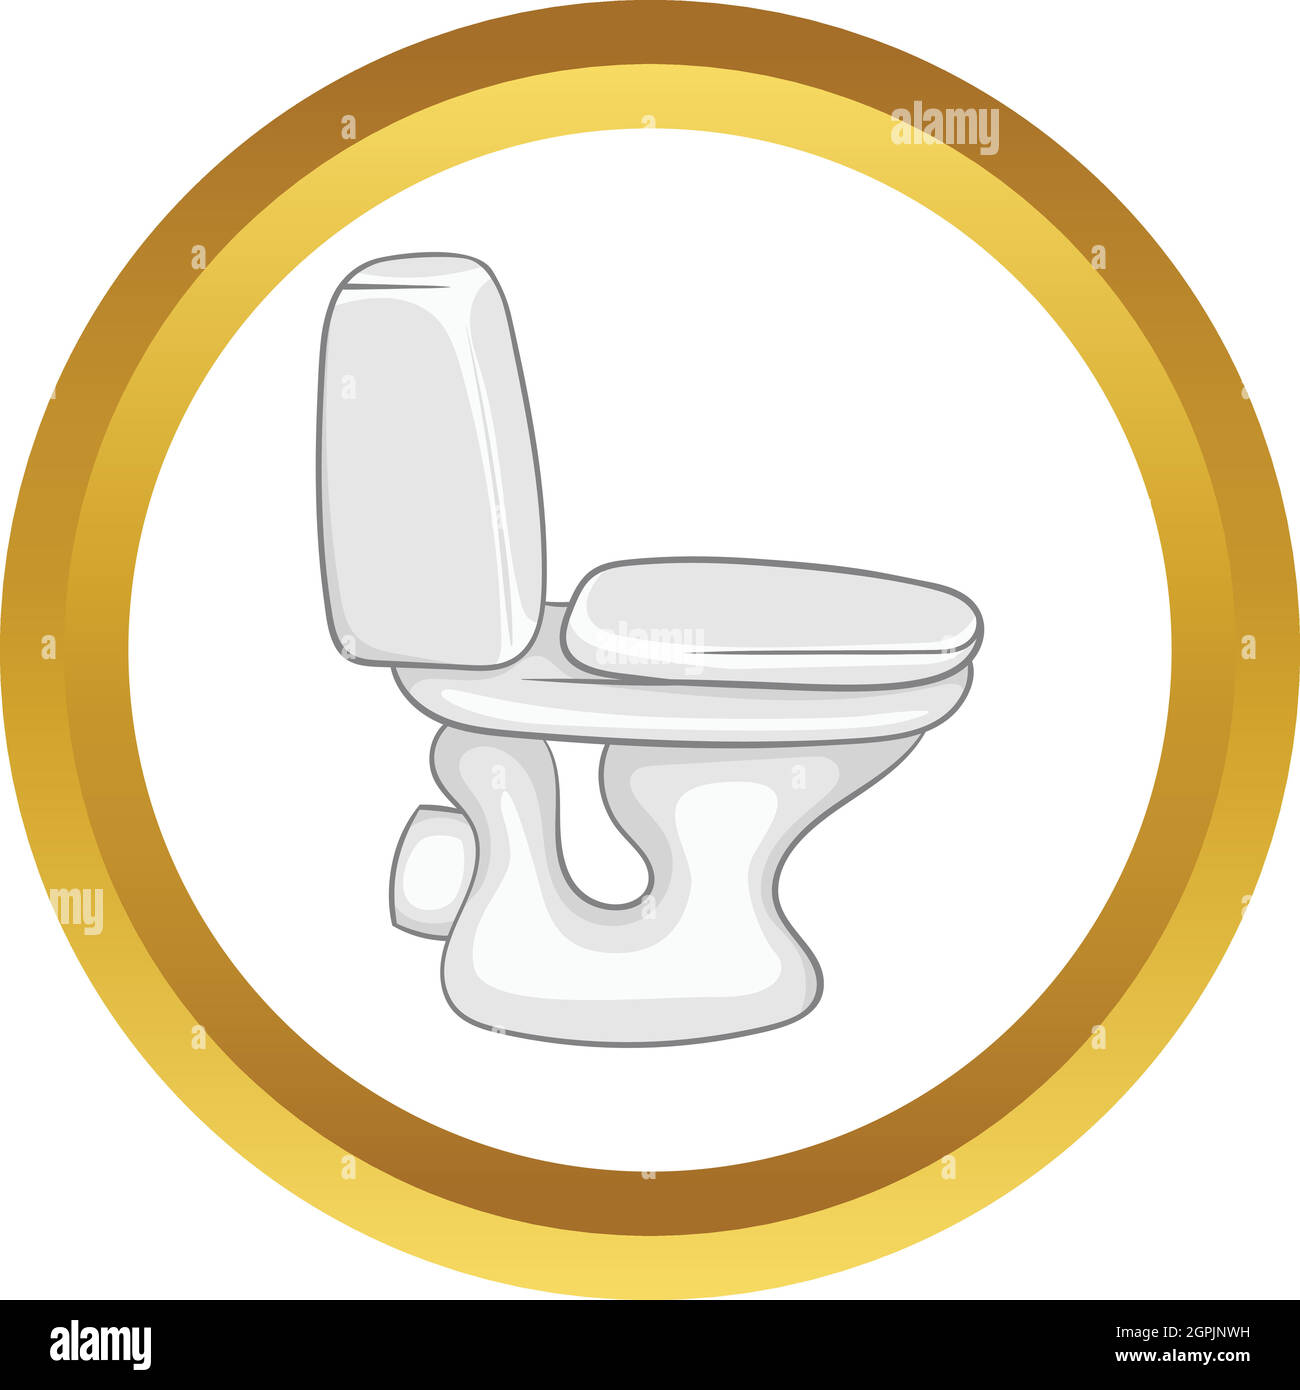 White toilet bowl vector icon Stock Vector